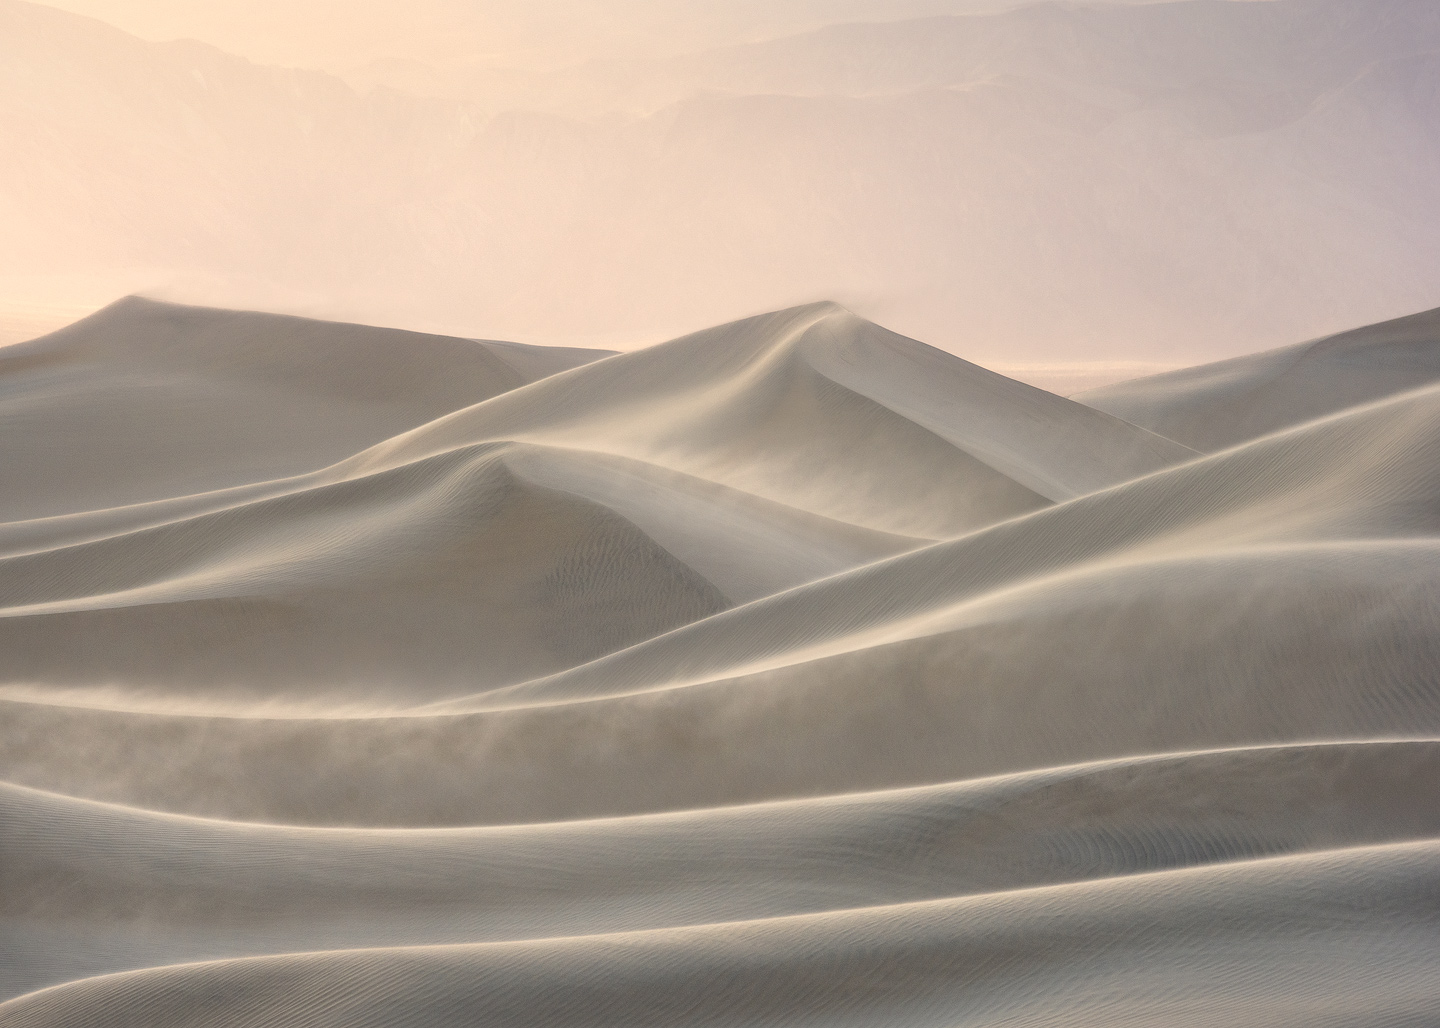 Death Valley National Park, Death Valley, DVNP, dunes, sand dunes, curves